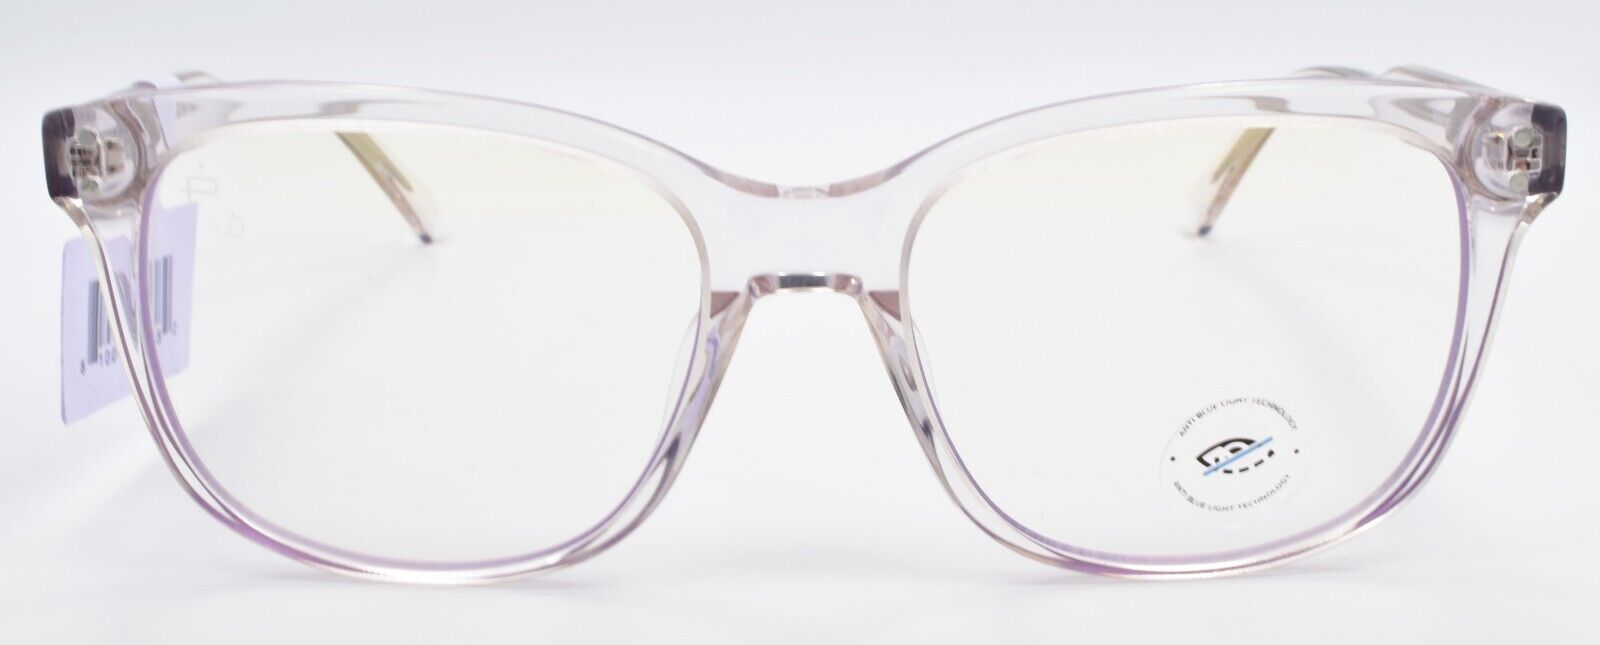 2-Prive Revaux The Bogart Eyeglasses Frames Blue Light Blocking RX-ready Clear-810047319382-IKSpecs